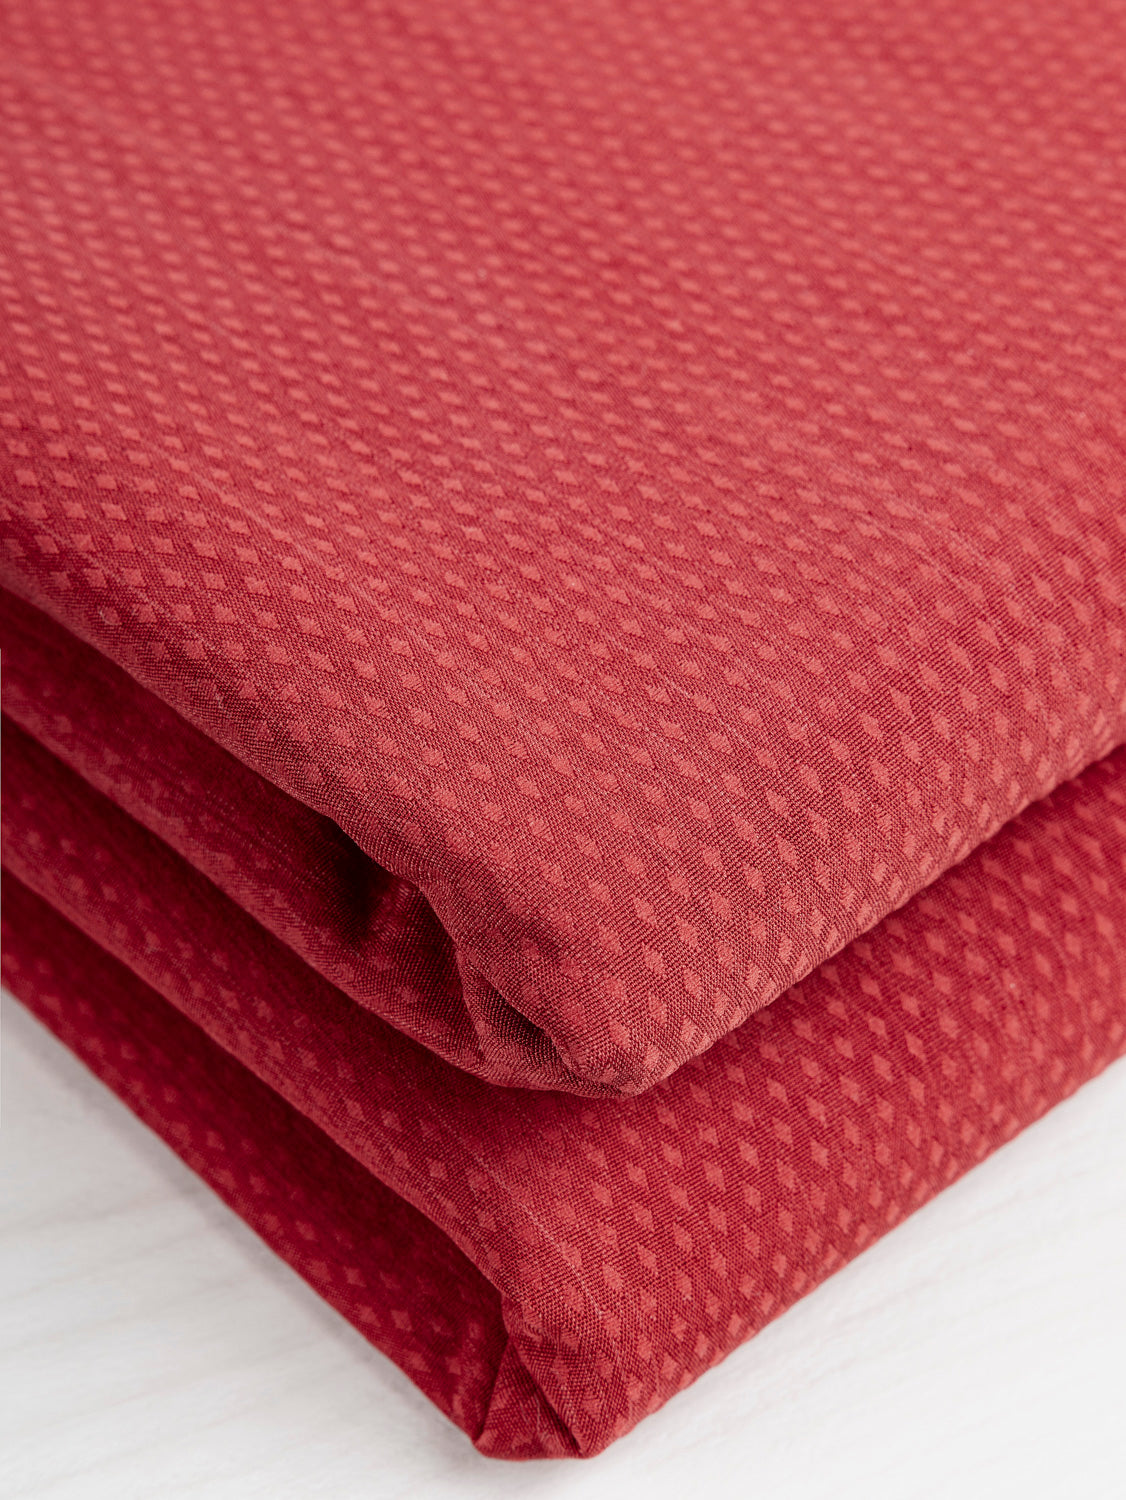 Deadstock Fabric + Designer Fabric, Online Fabric Store